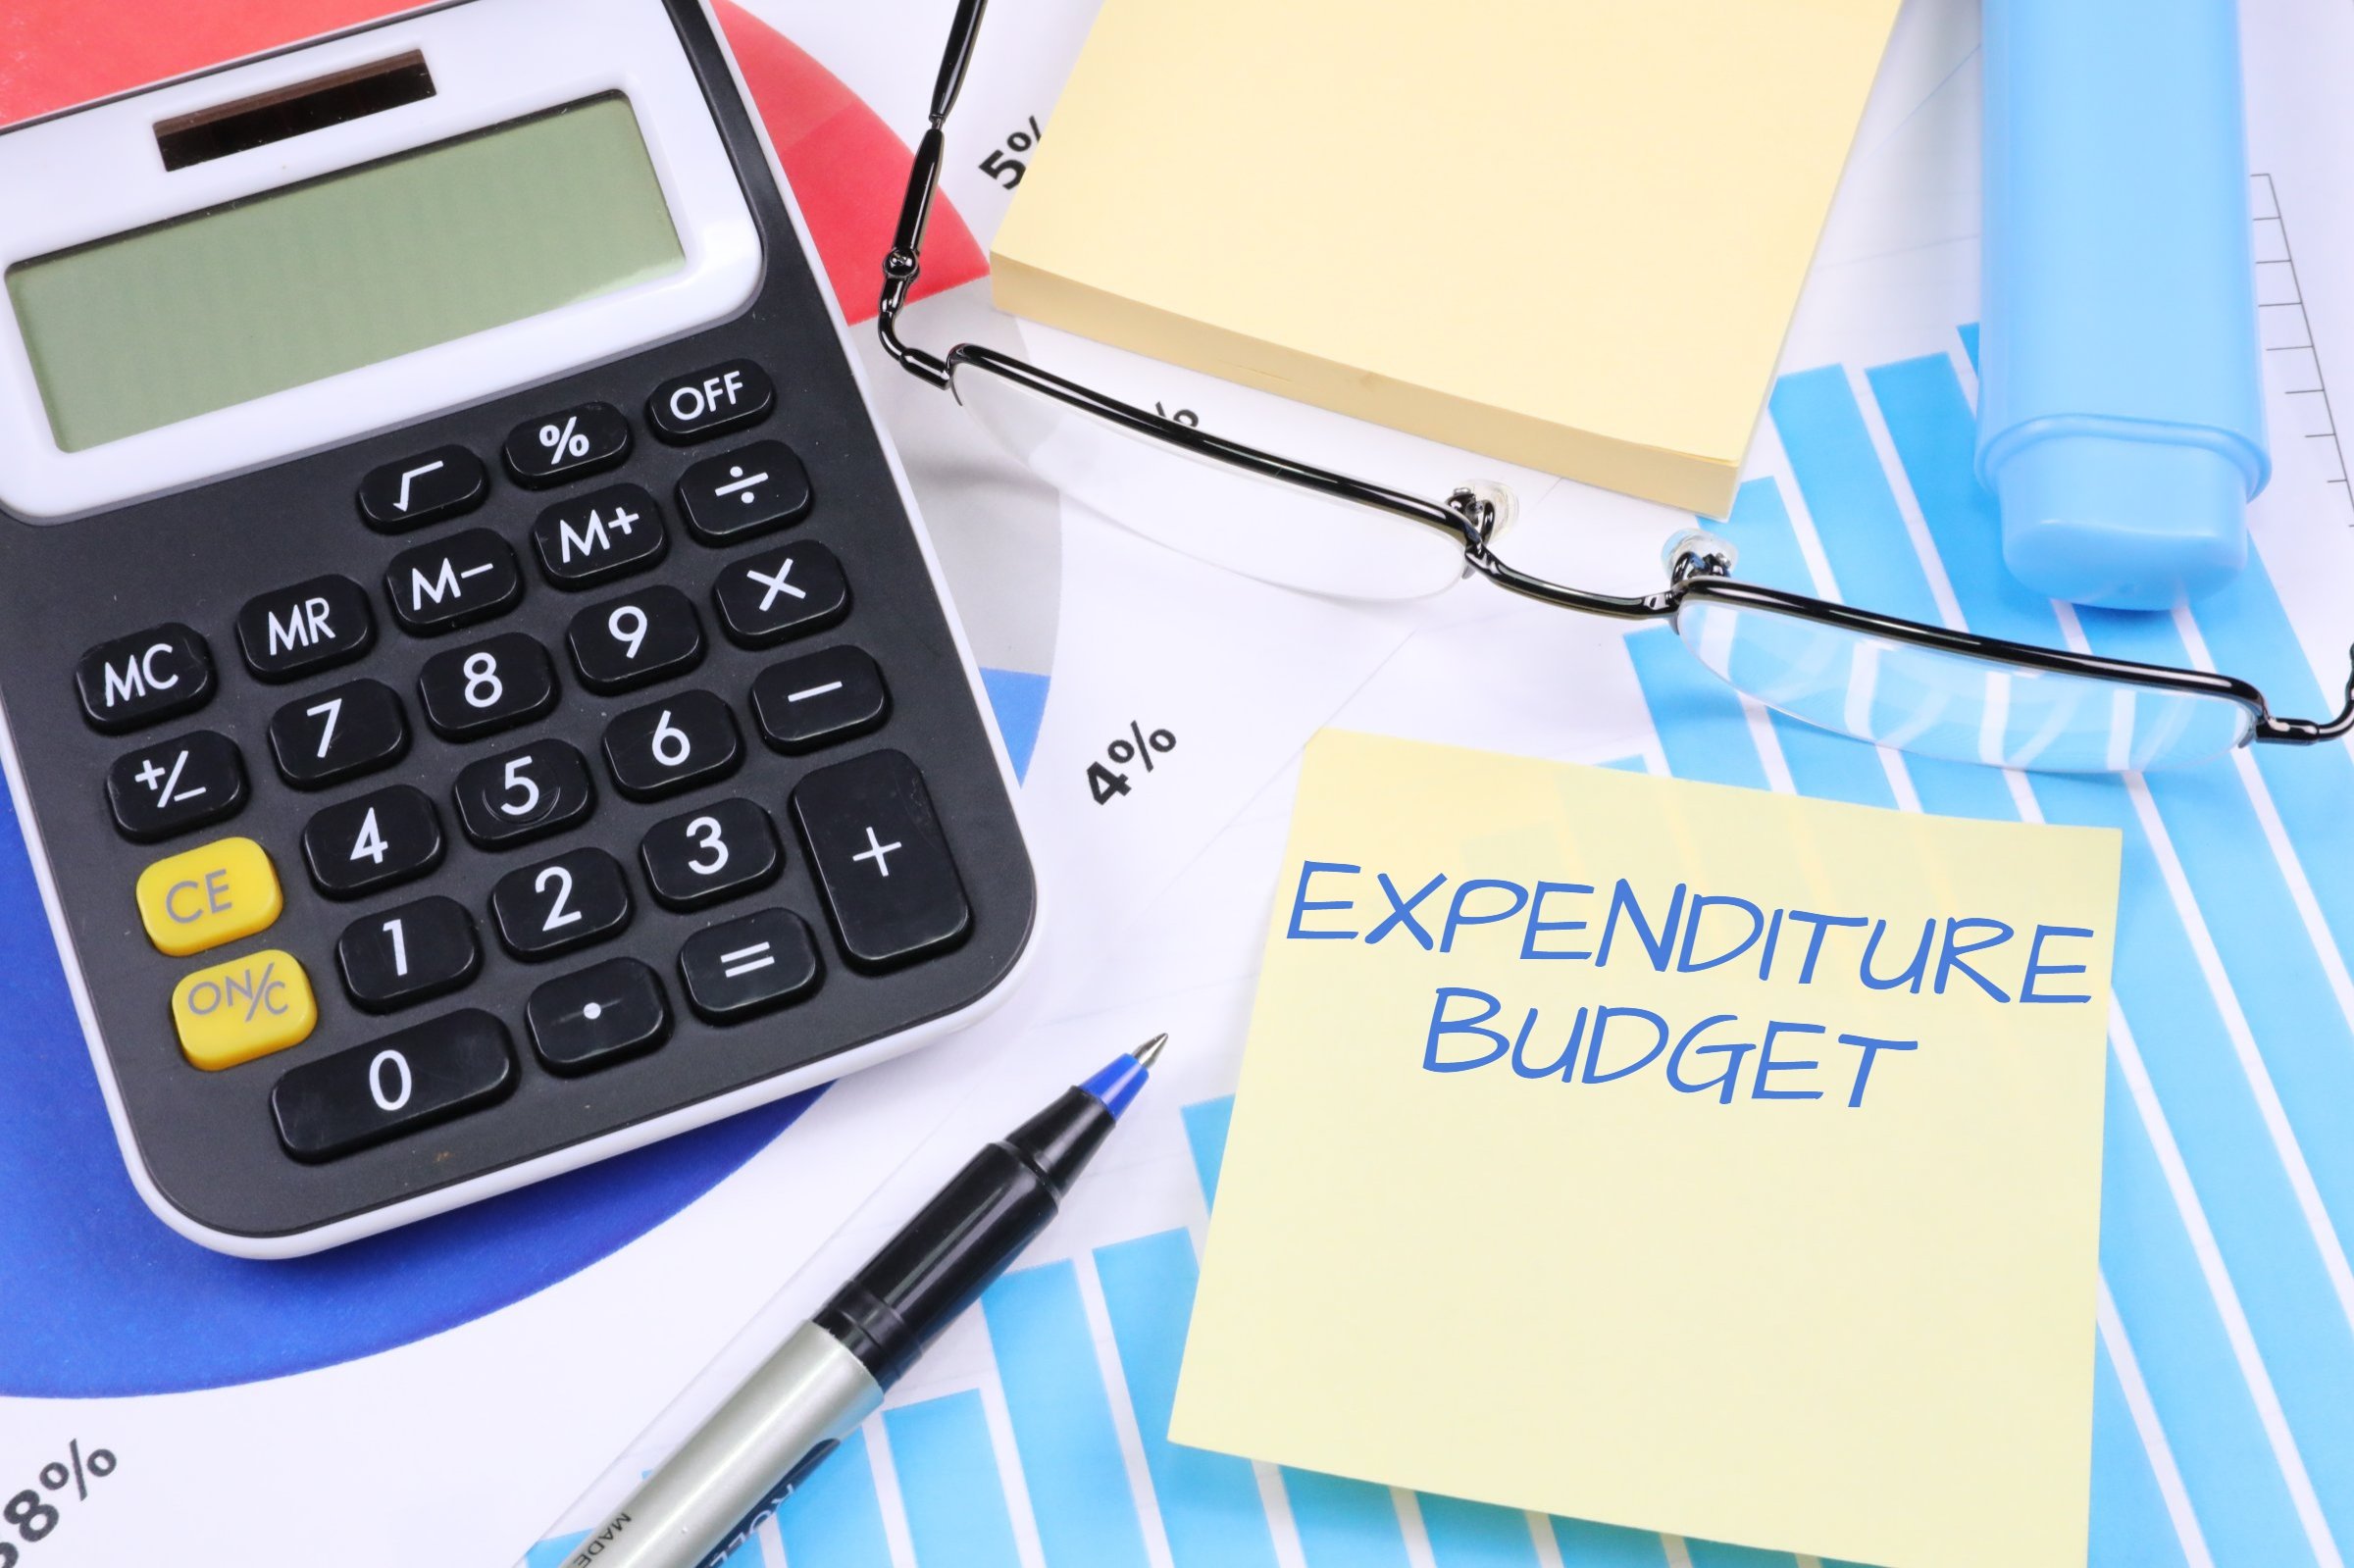 Expenditure Budget